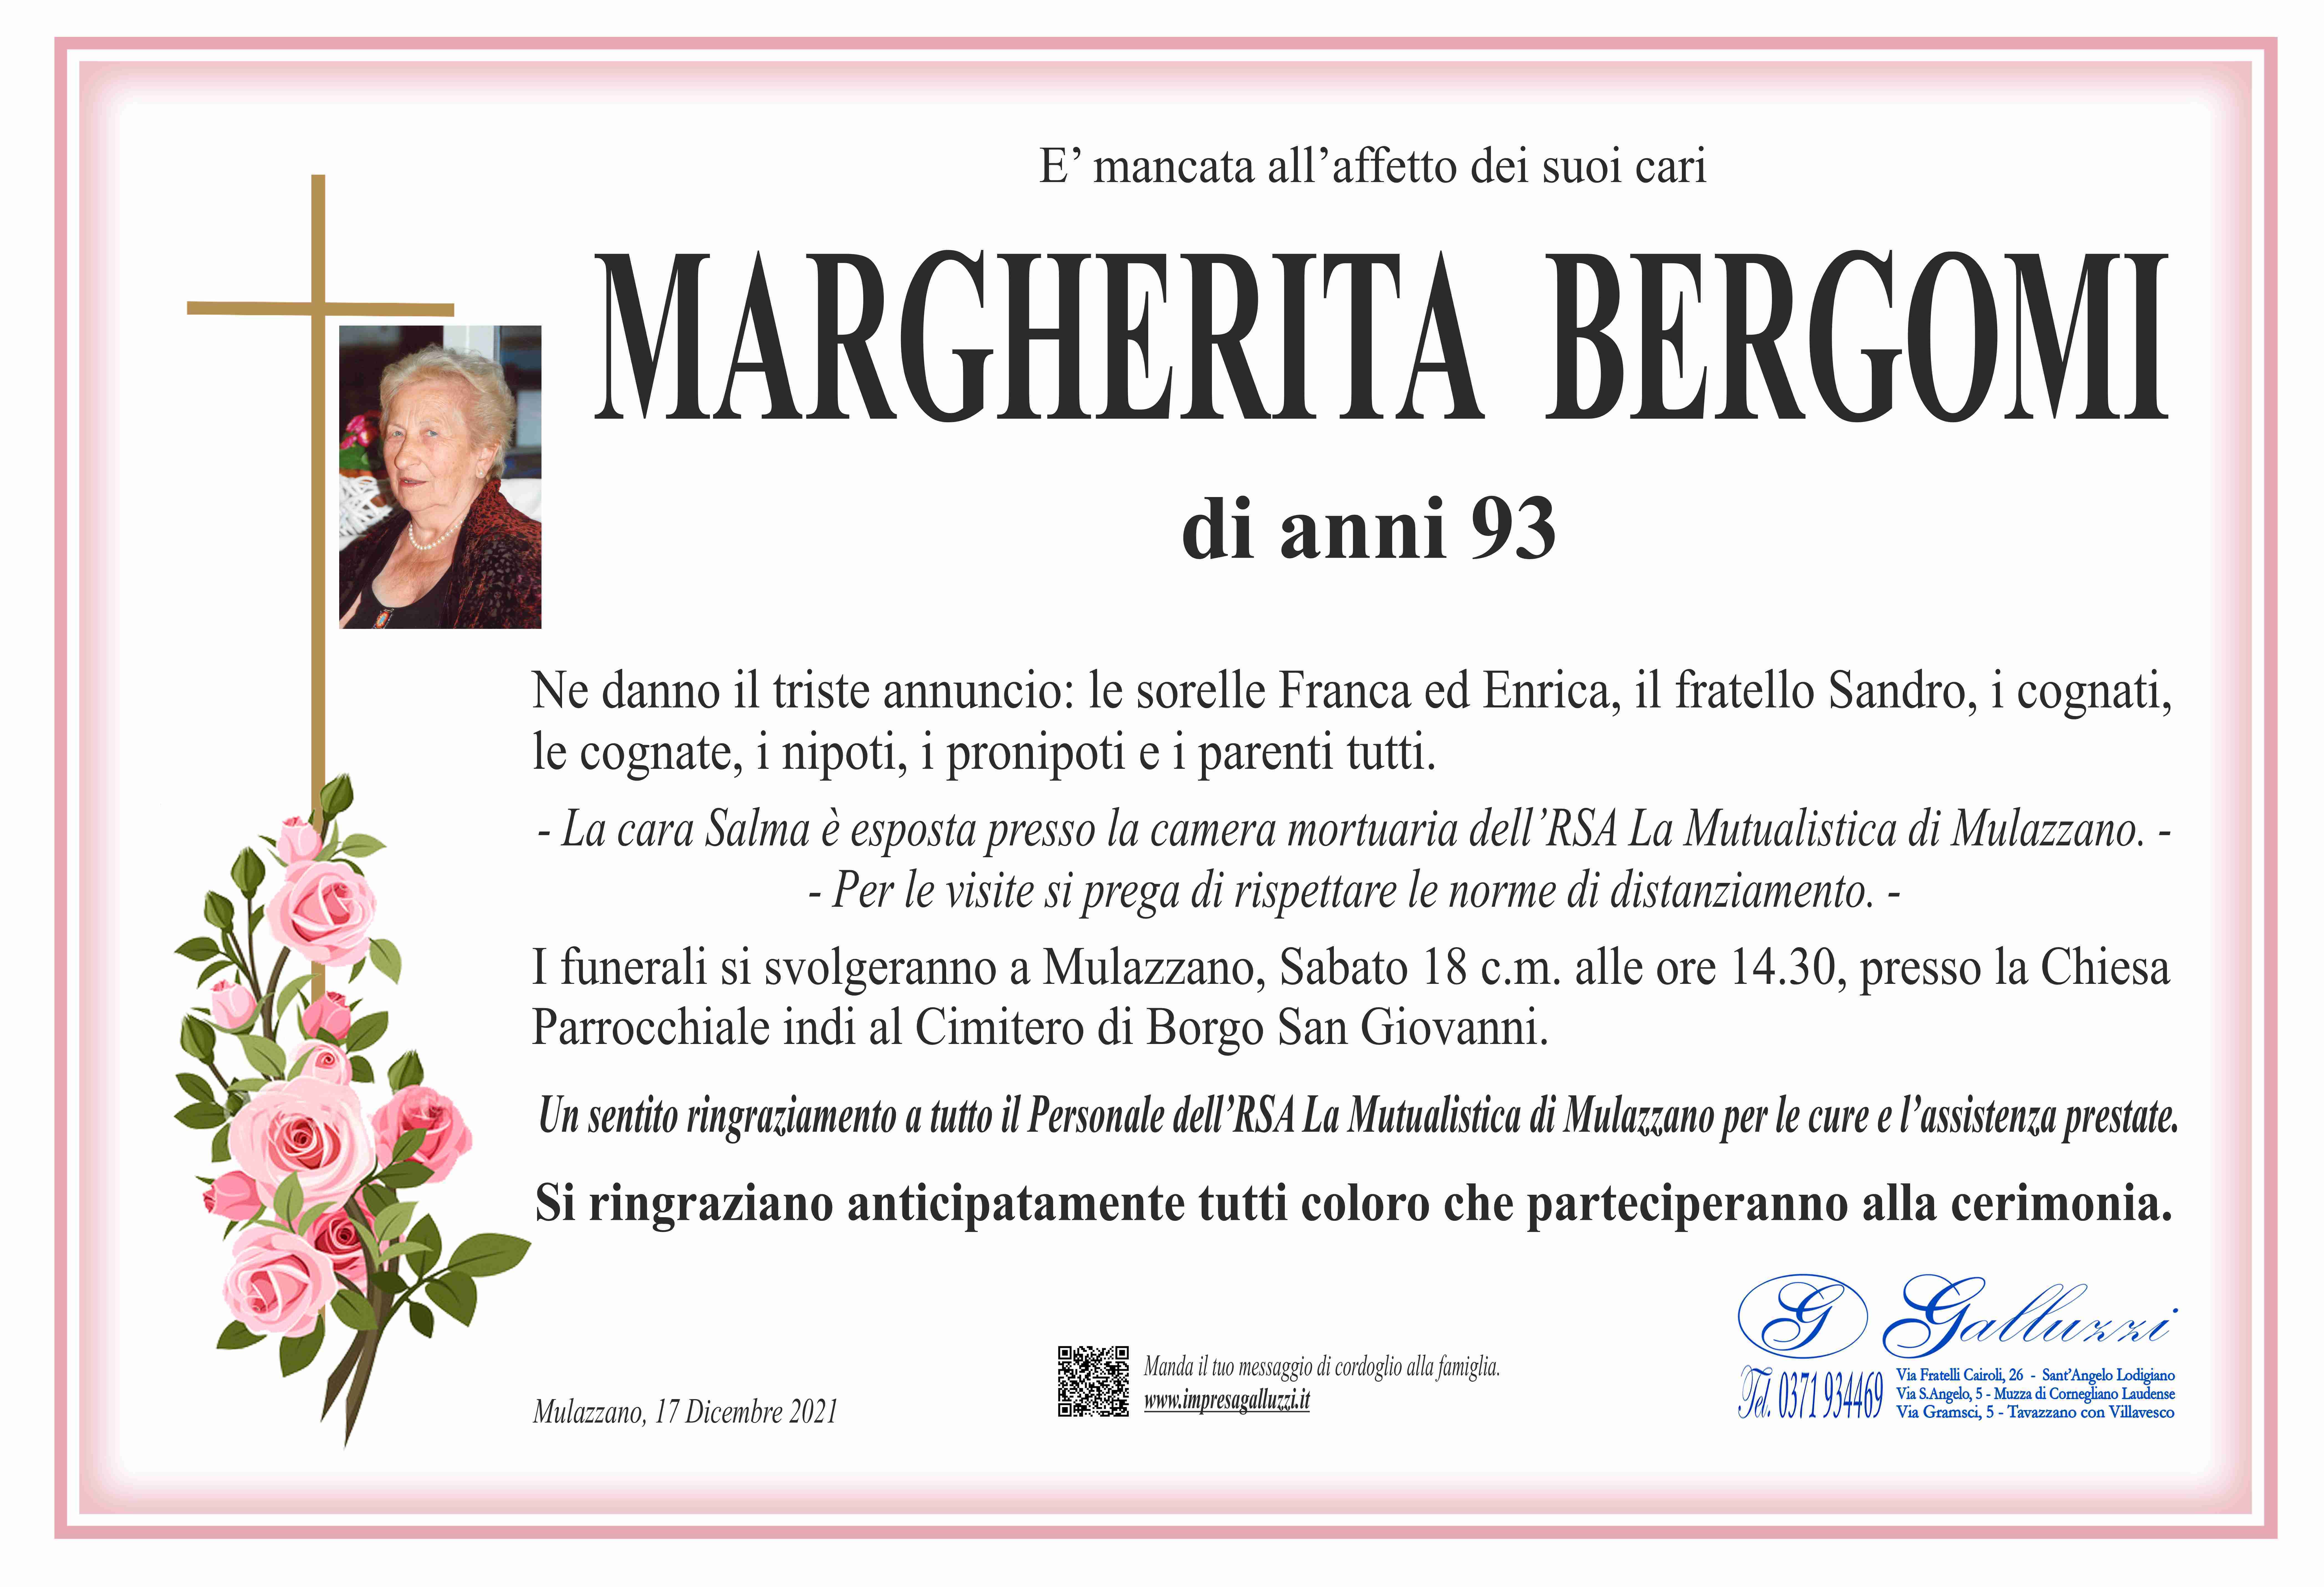 Margherita Bergomi